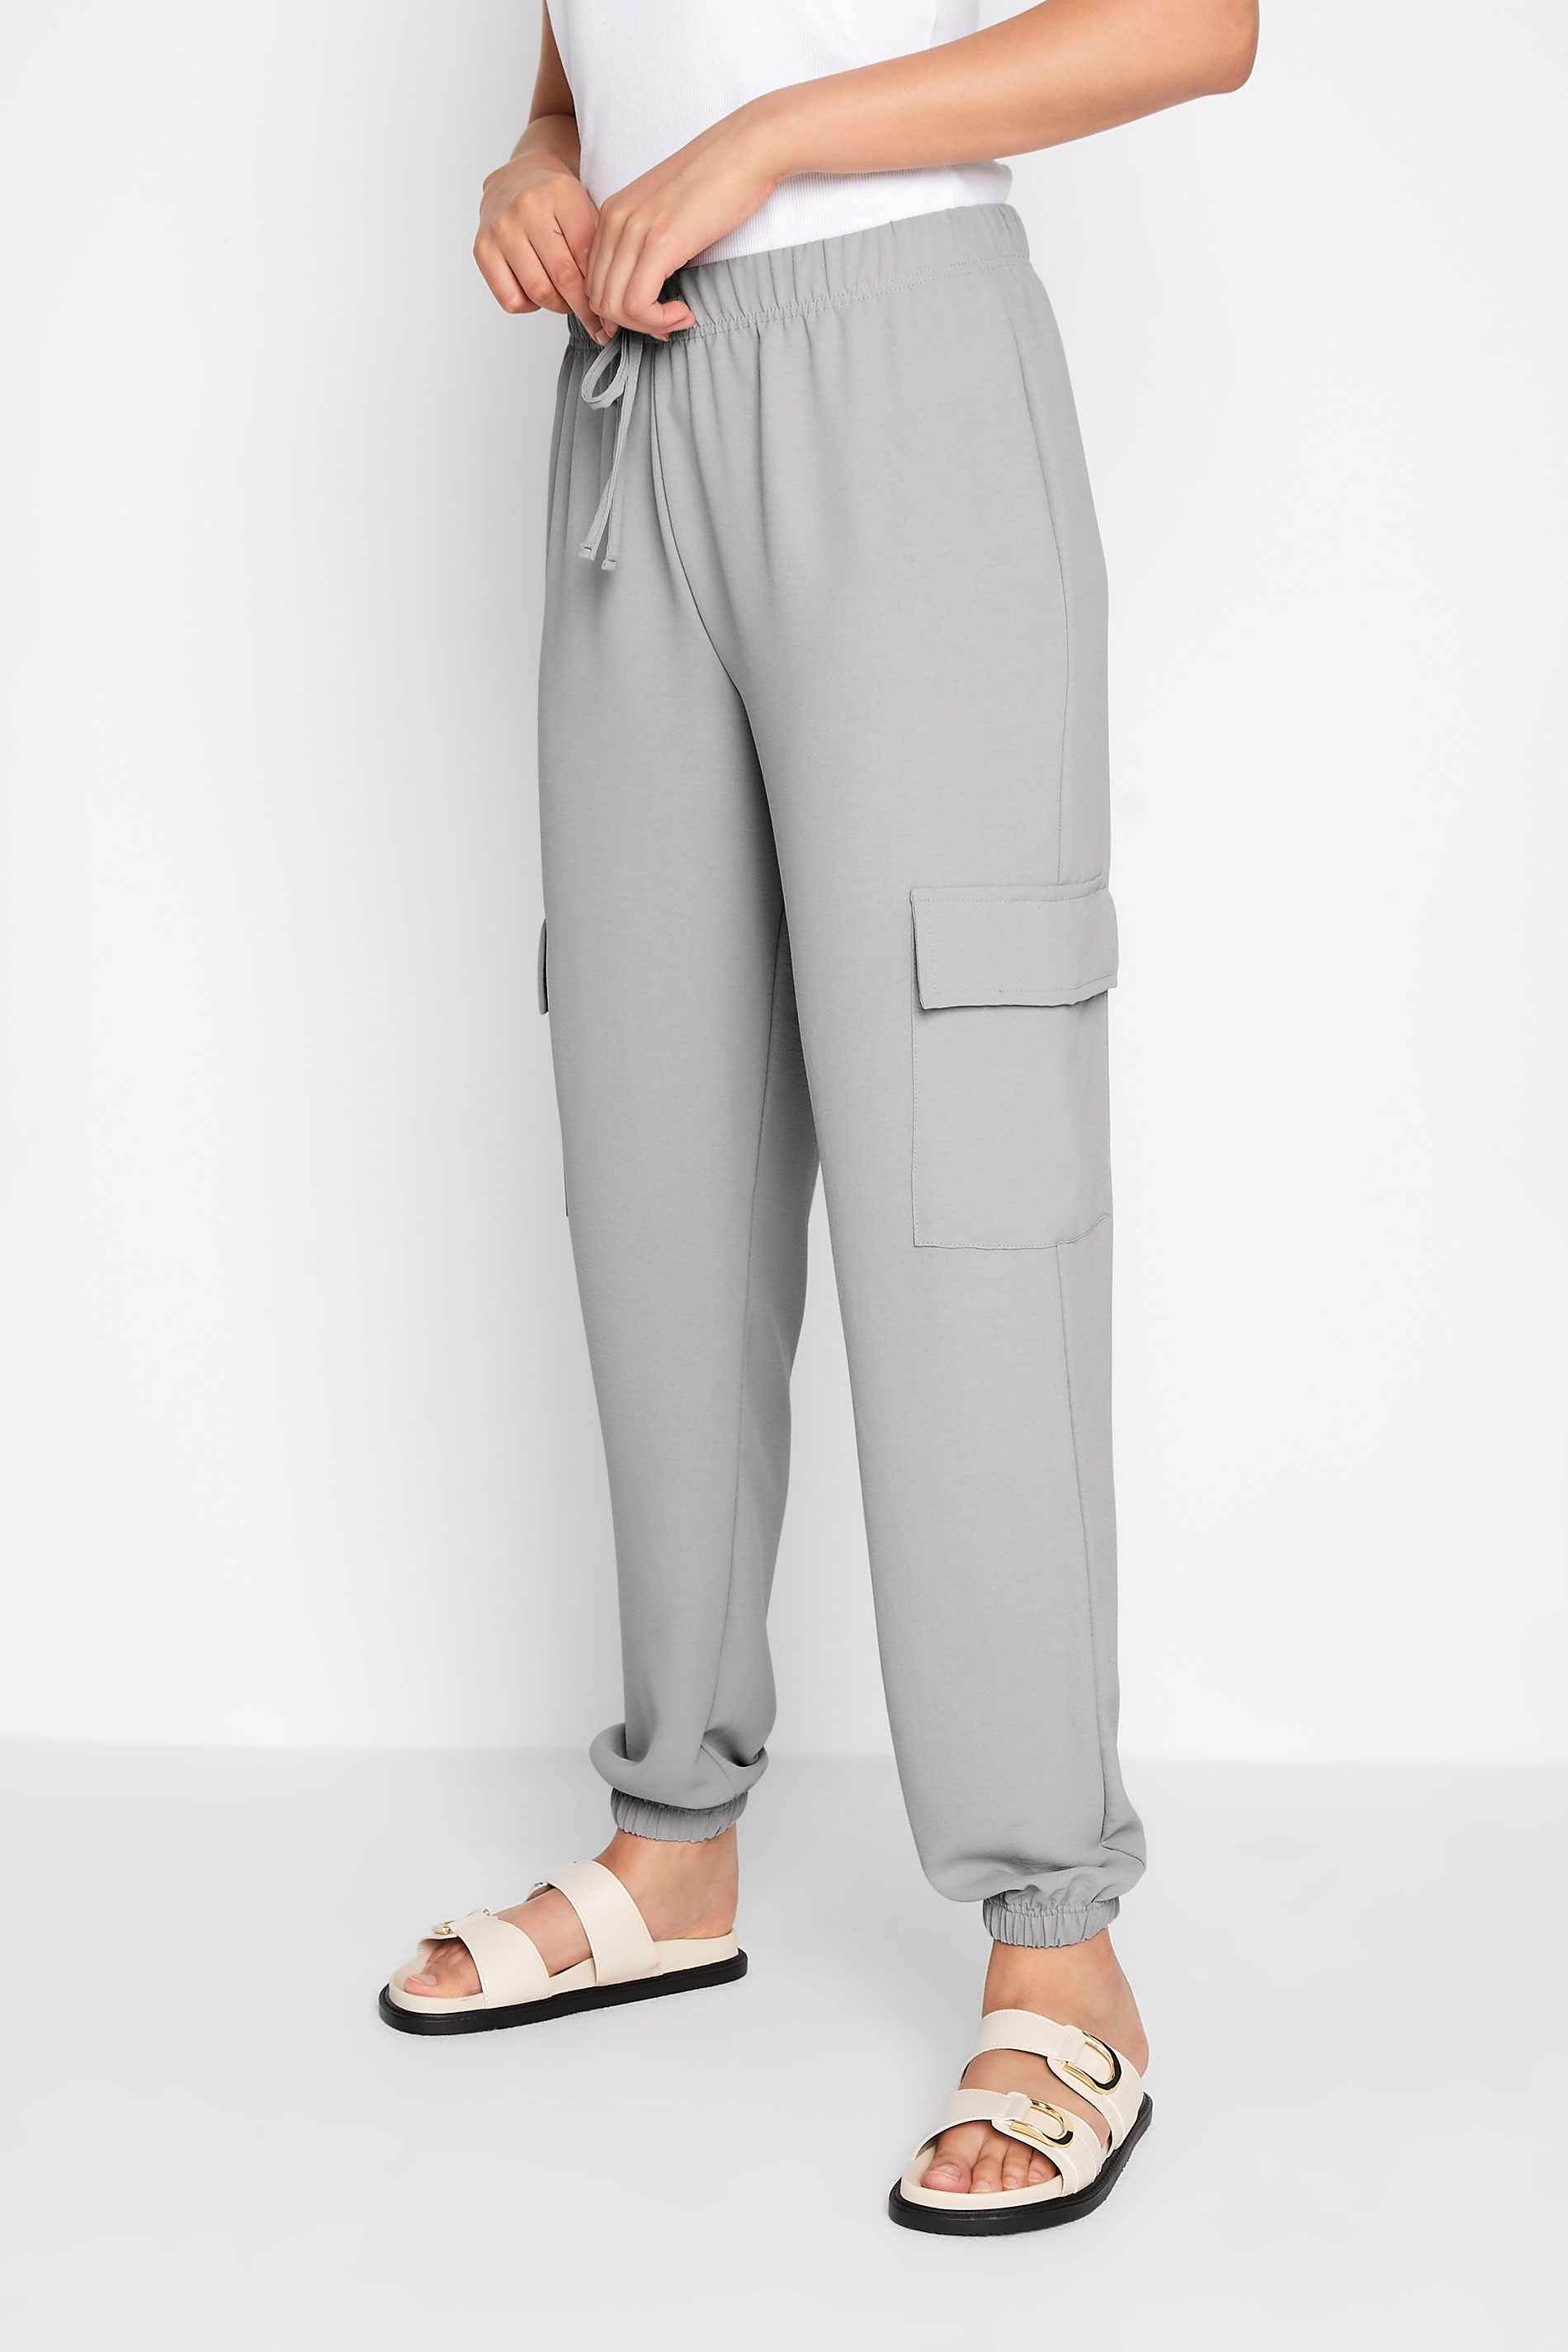 LTS Tall Women's Grey Cuffed Utility Trousers | Long Tall Sally 1